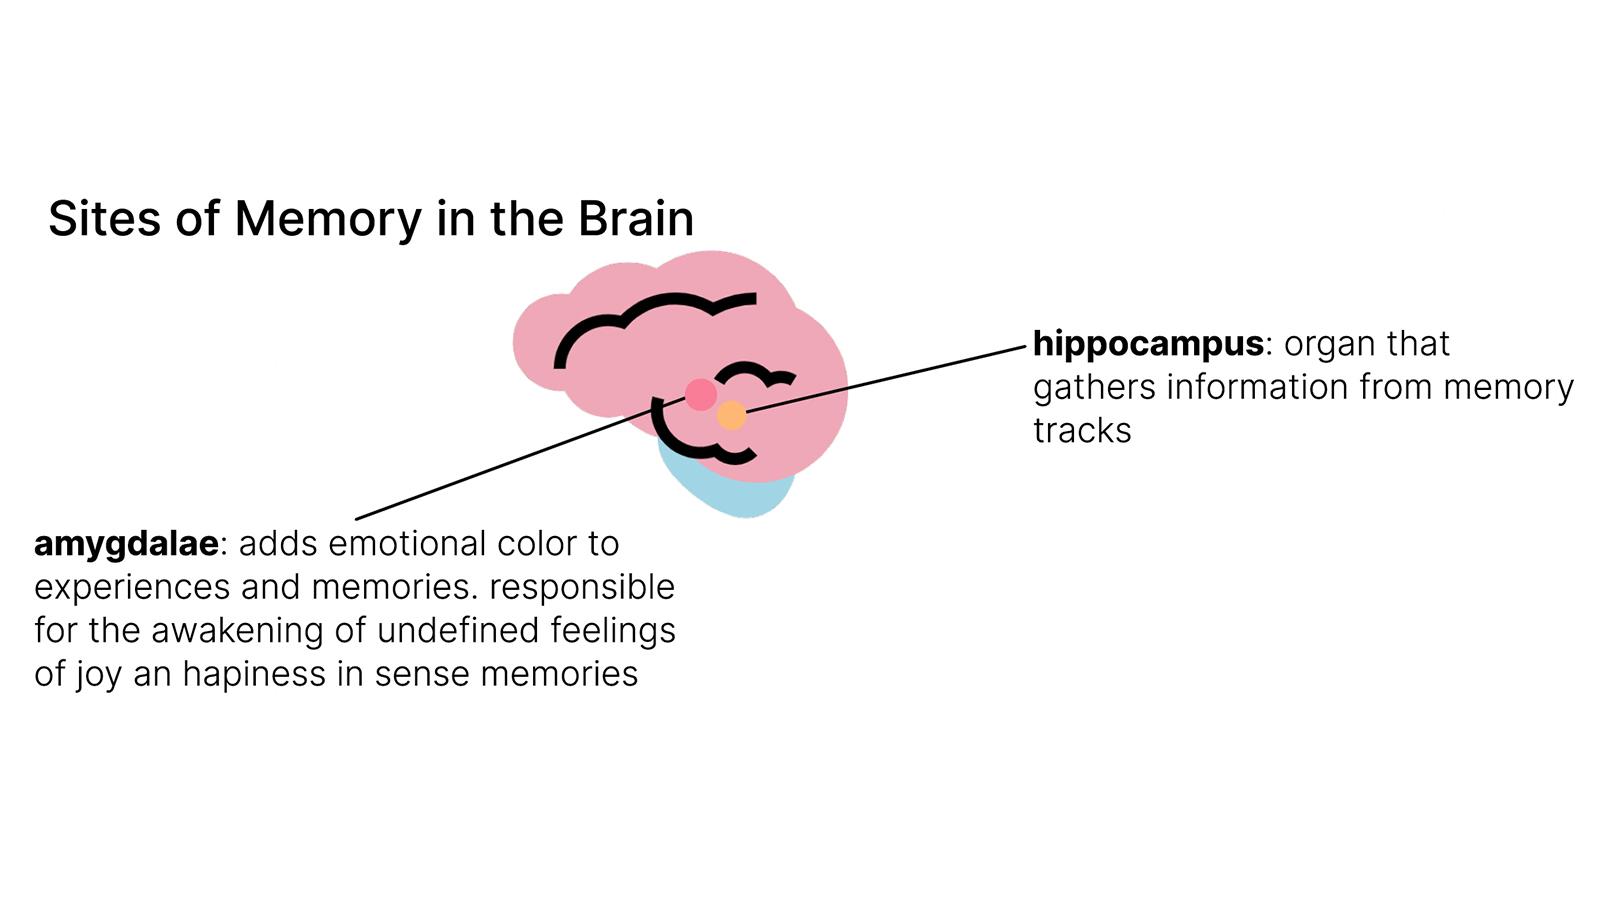 Diagram of Memory Sites in the Brain -- Amygdala and Hippocampus